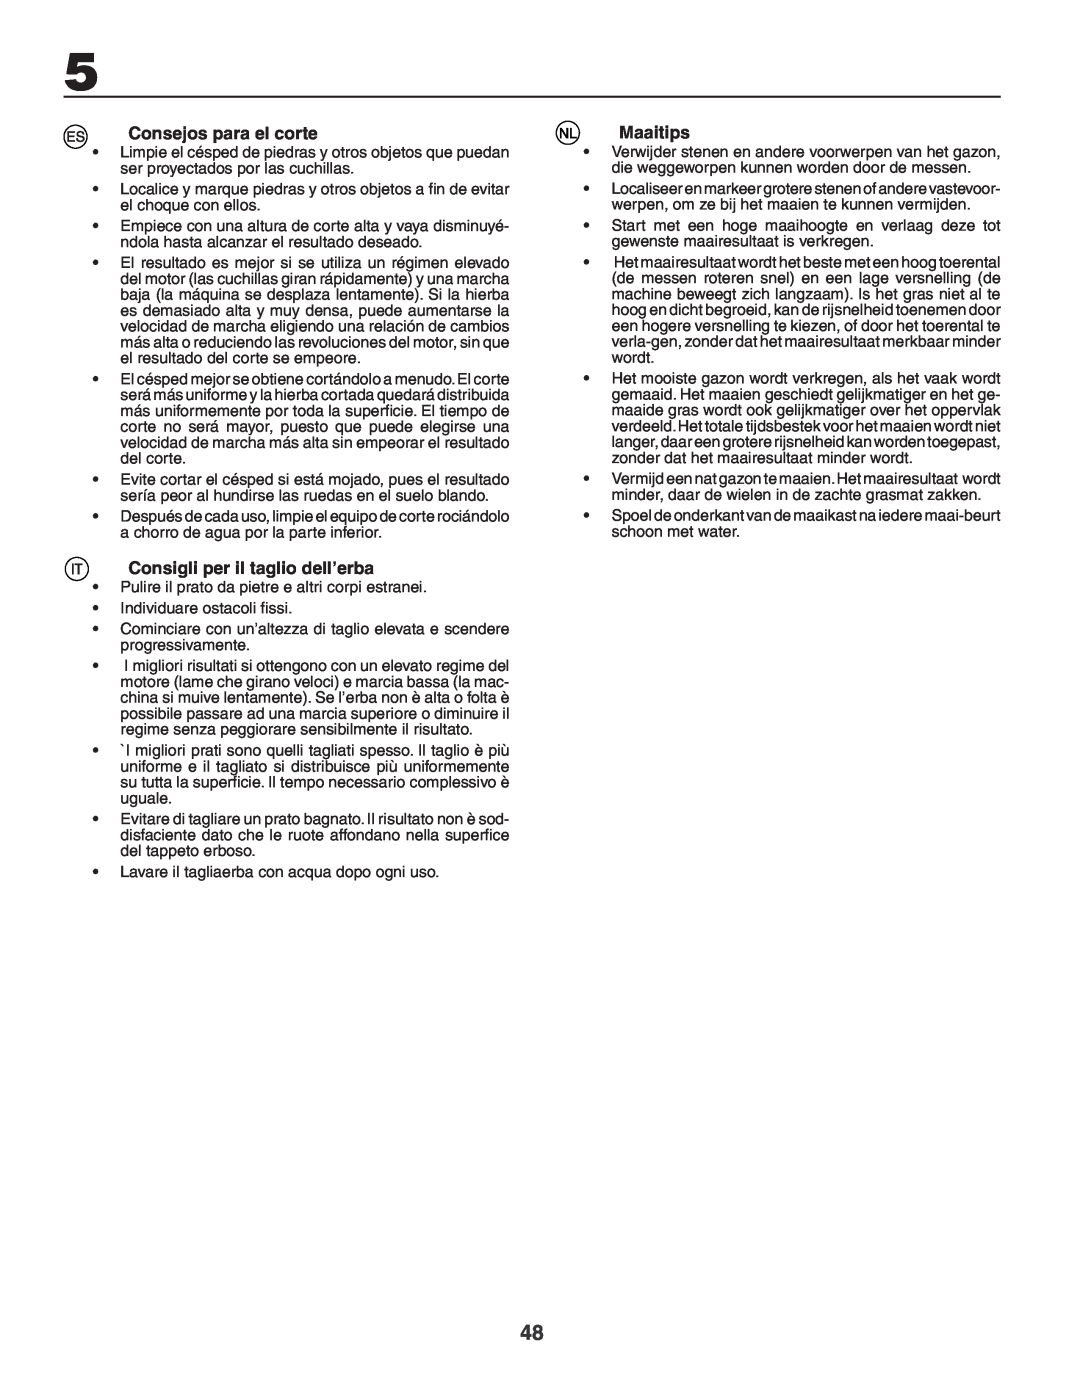 Husqvarna GTH260XP instruction manual Consejos para el corte, Consigli per il taglio dell’erba, Maaitips 